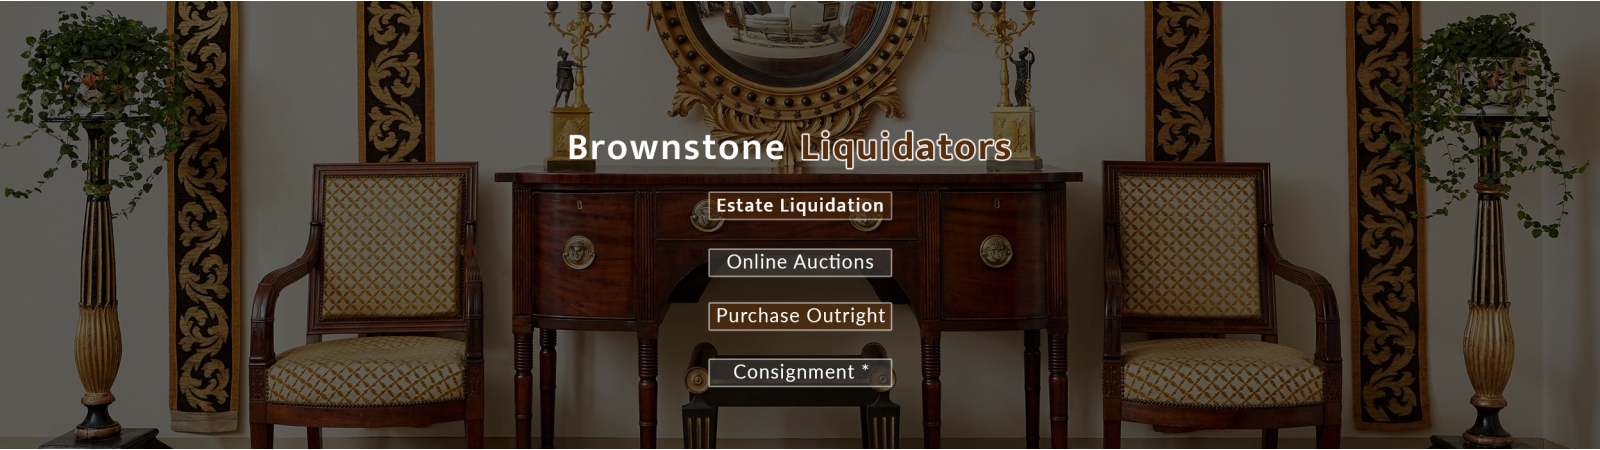 Brownstone Liquidators | AuctionNinja